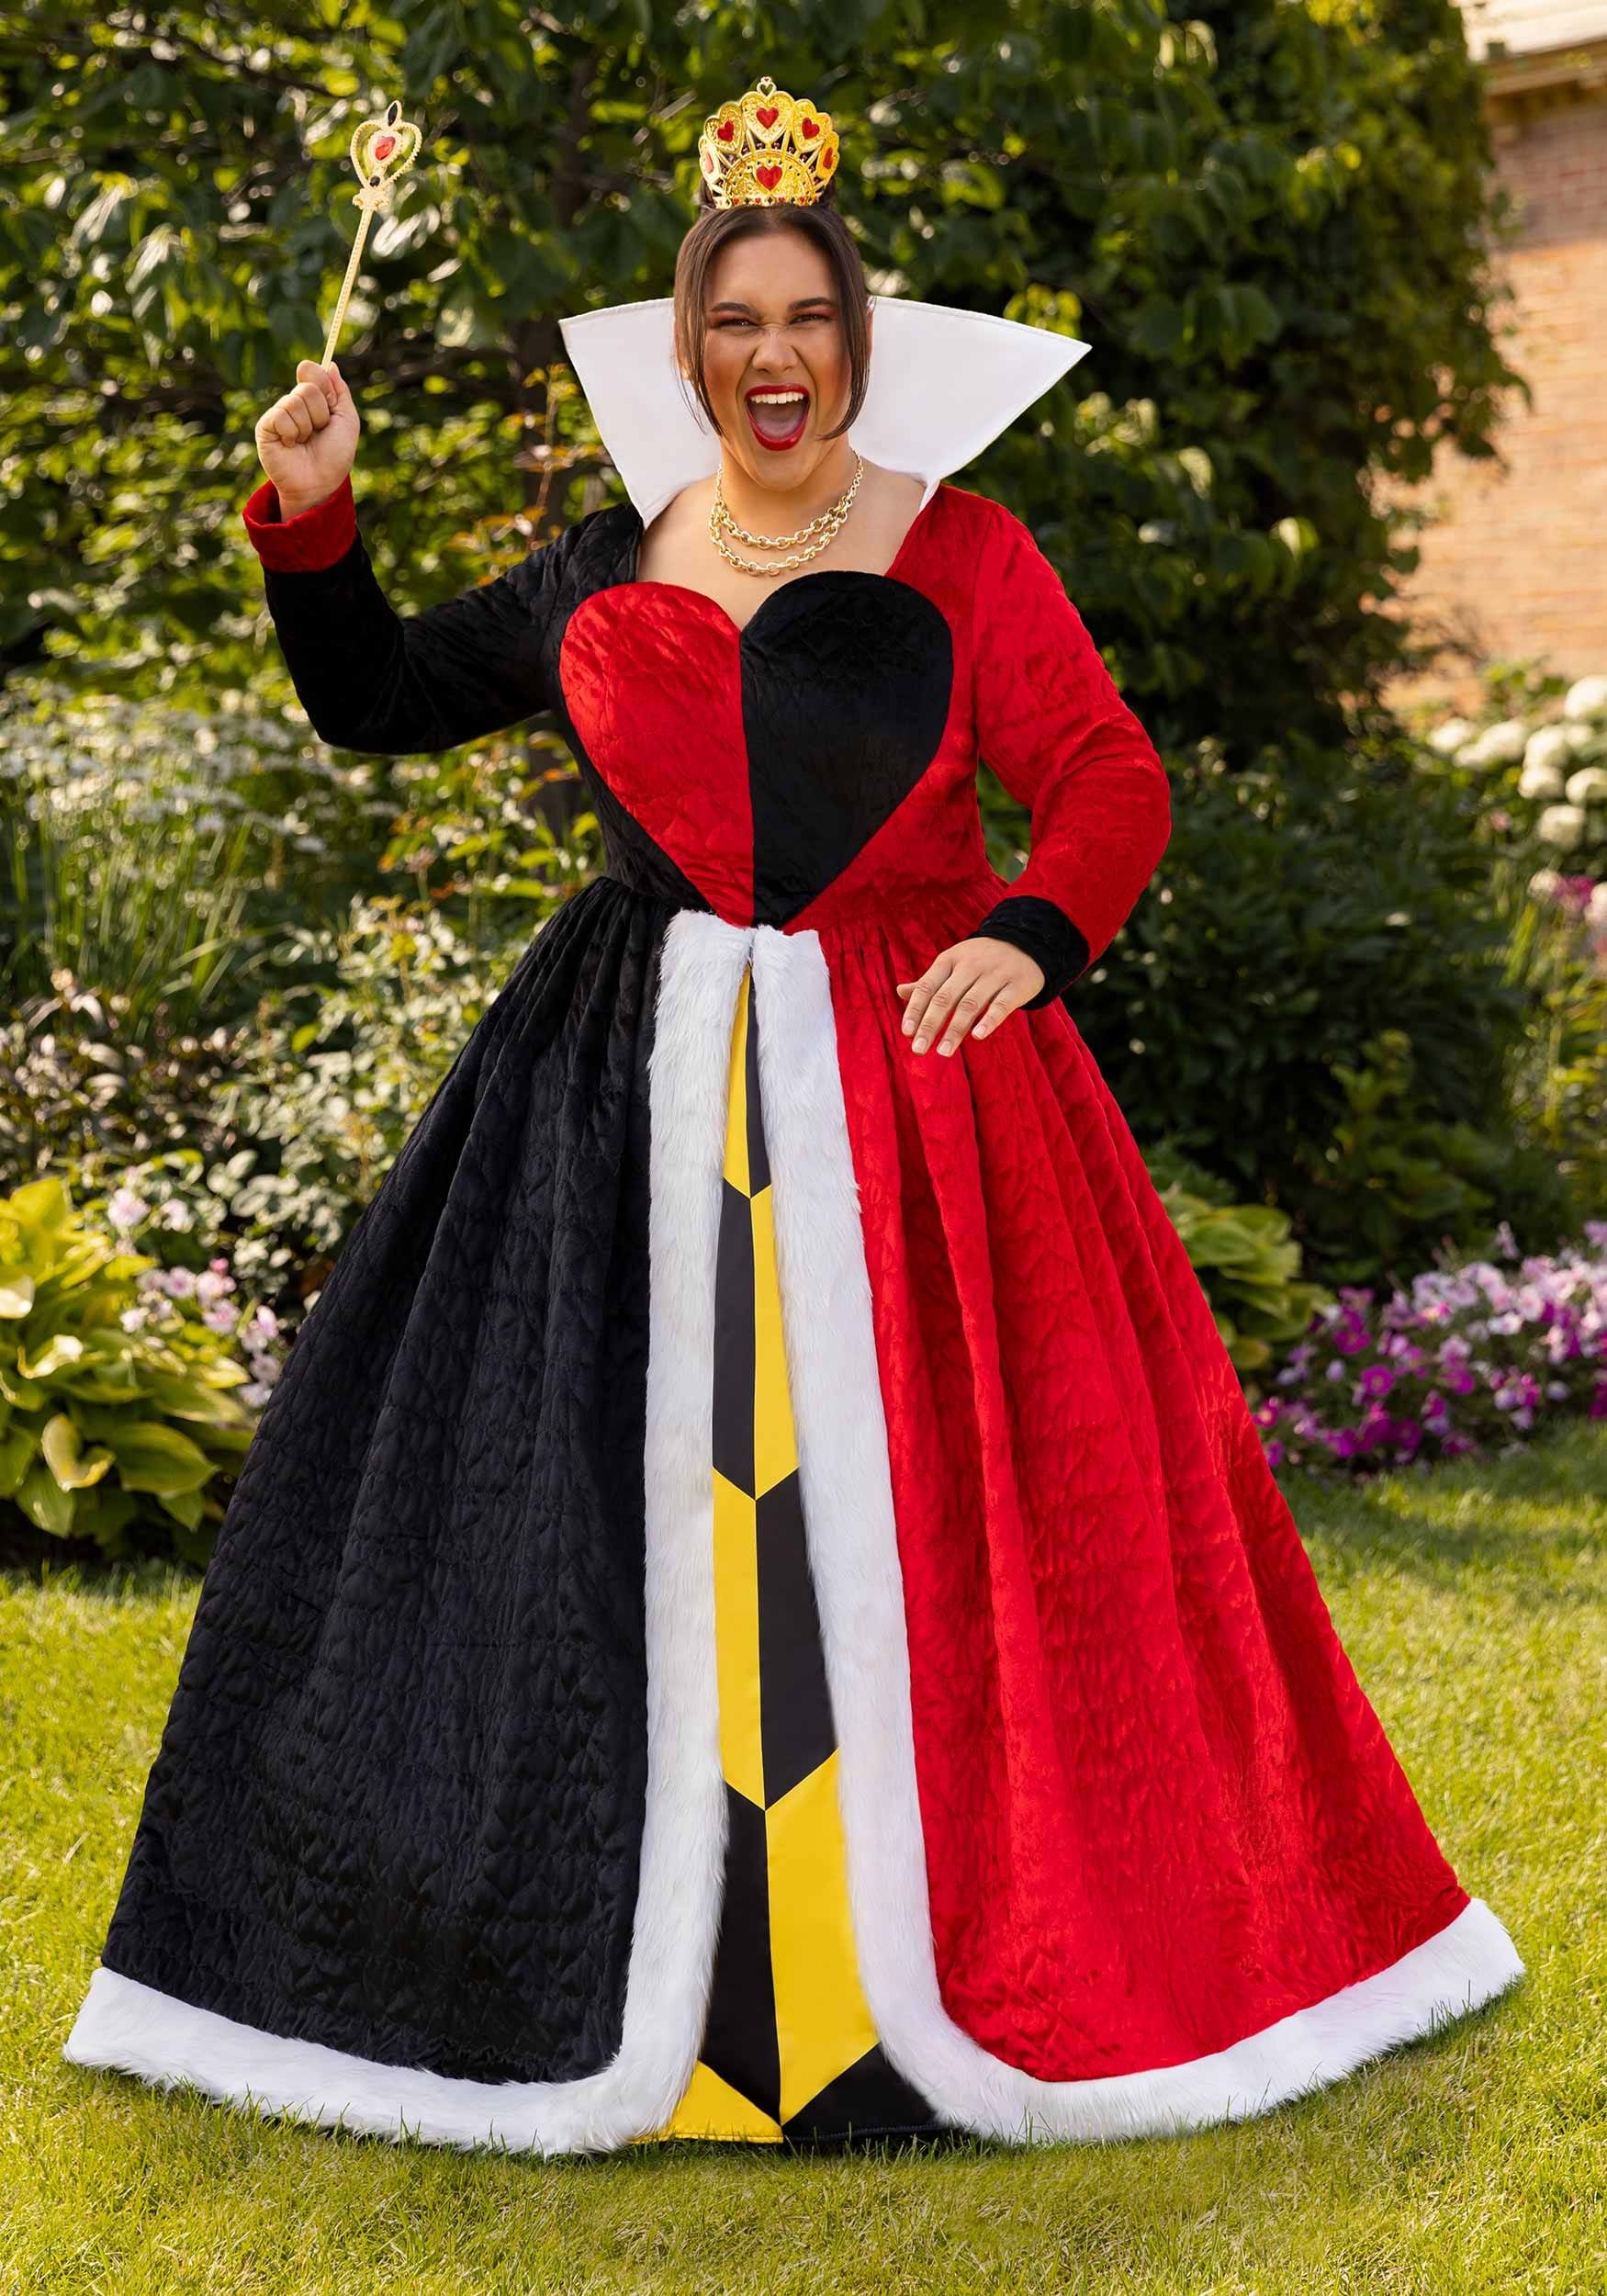 Women's Plus Size Authentic Disney Queen of Hearts Costume